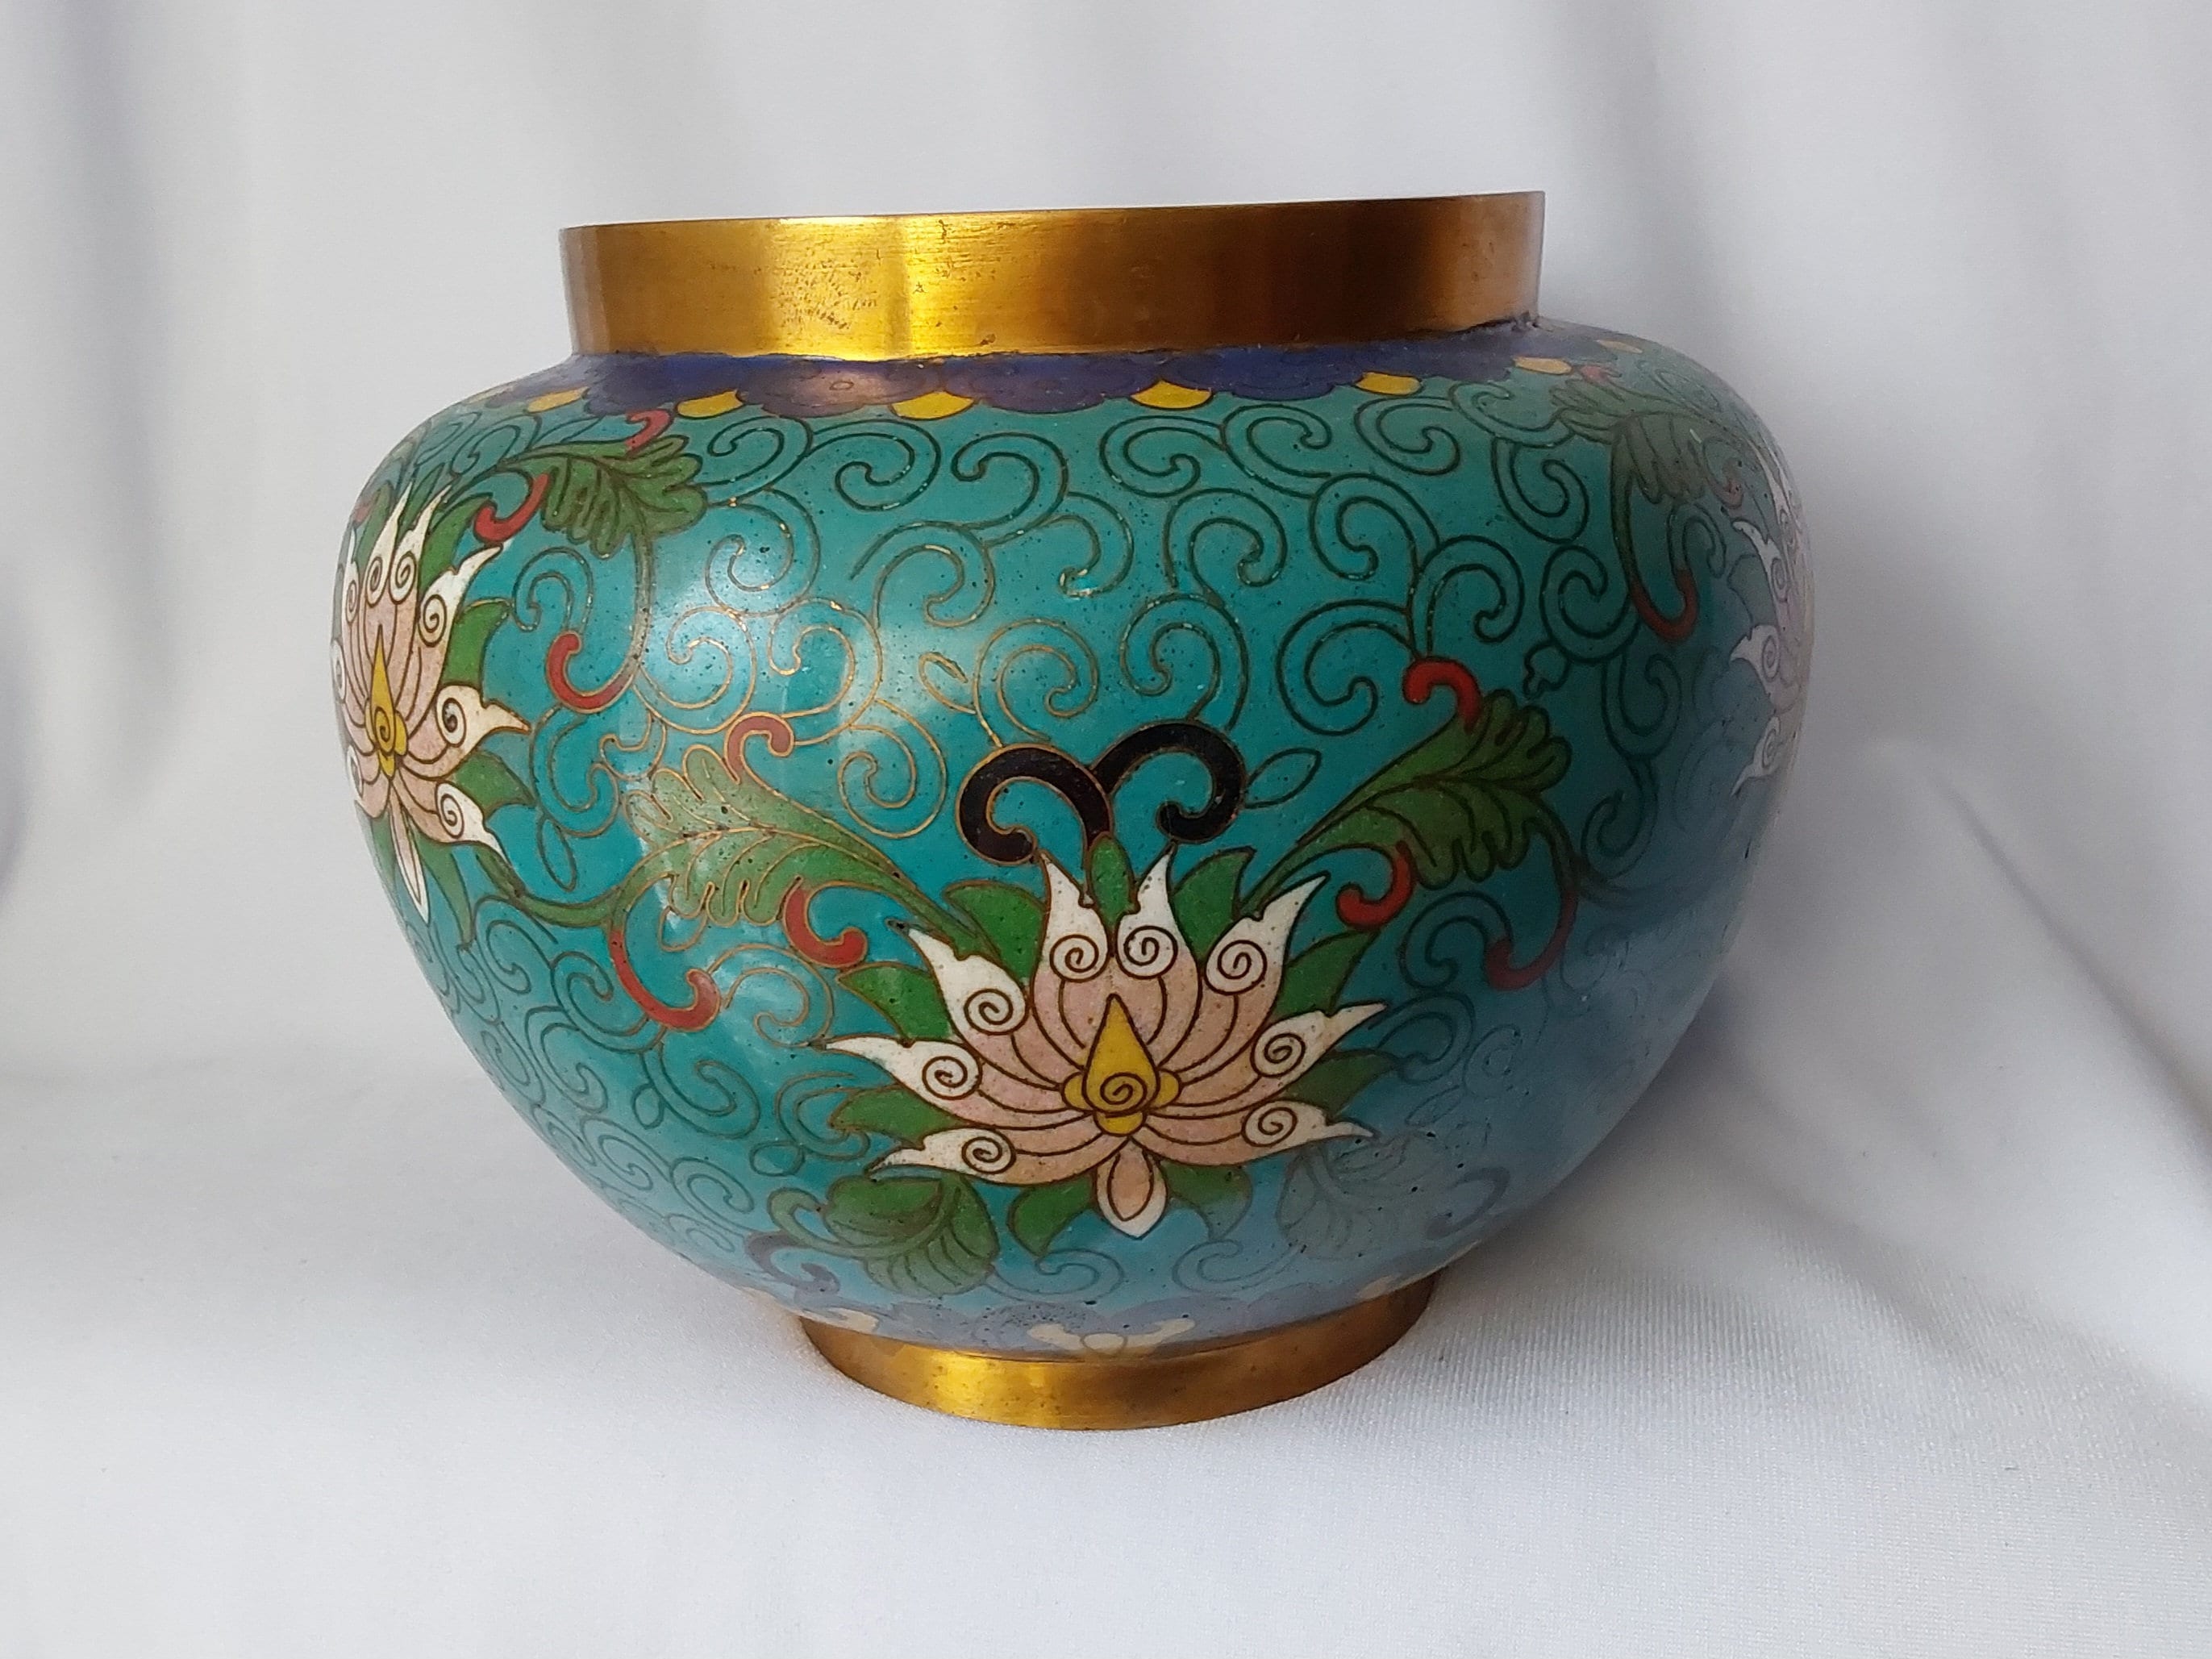 Pair of Antique Cloisonne Spice Jars, English Ceramic, Decorative Pot,  Victorian For Sale at 1stDibs